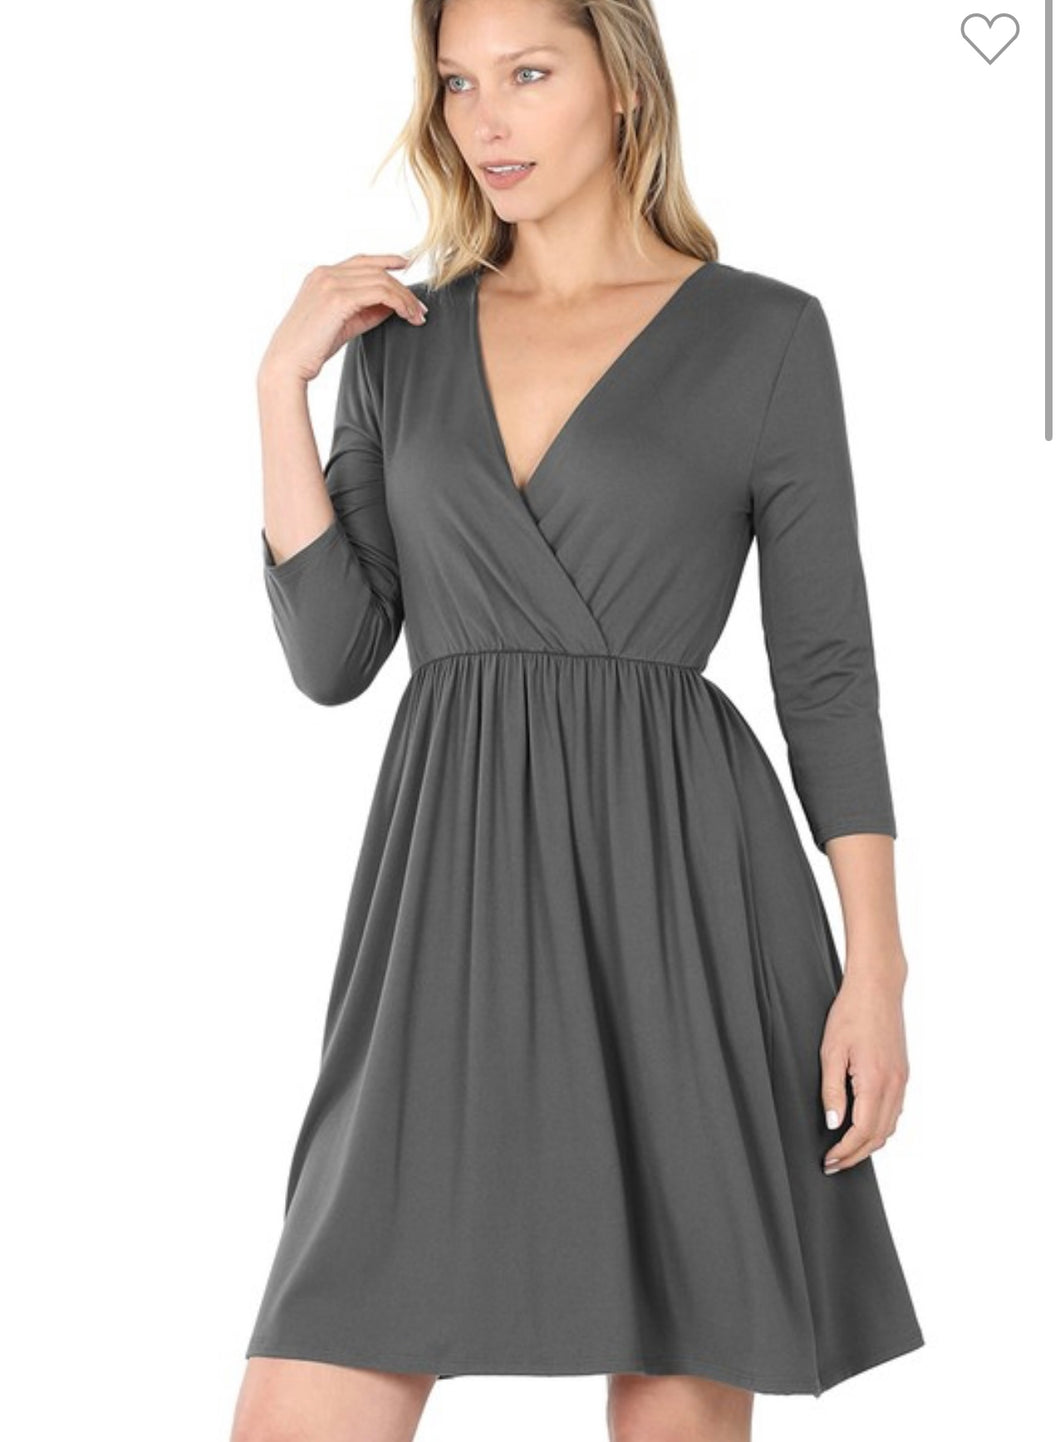 Ash Grey Buttery Soft 3/4 Sleeve Surplice Dress